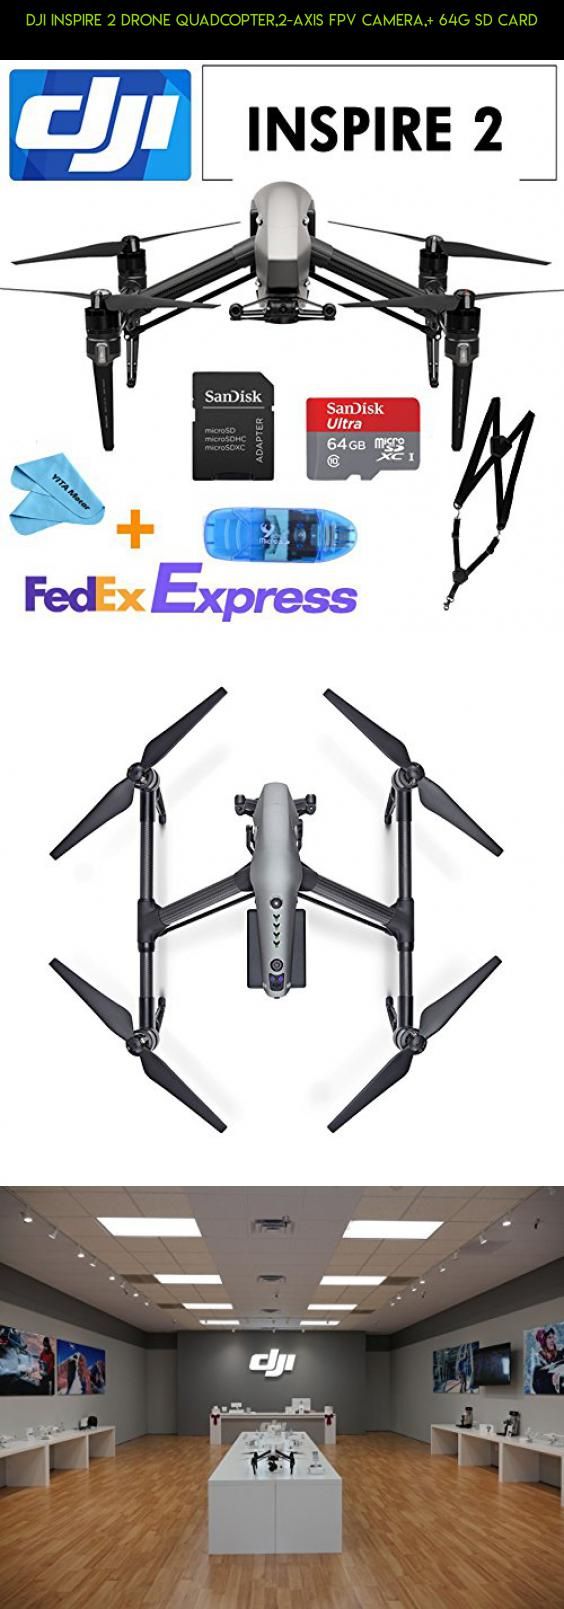 DJI INSPIRE 2 Drone Quadcopter,2-axis FPV camera,+ 64G SD Card #fpv #camera #2 #sd #inspire #kit #racing #drone #products #card #plans #tech #gadgets #dji #parts #technology #shopping